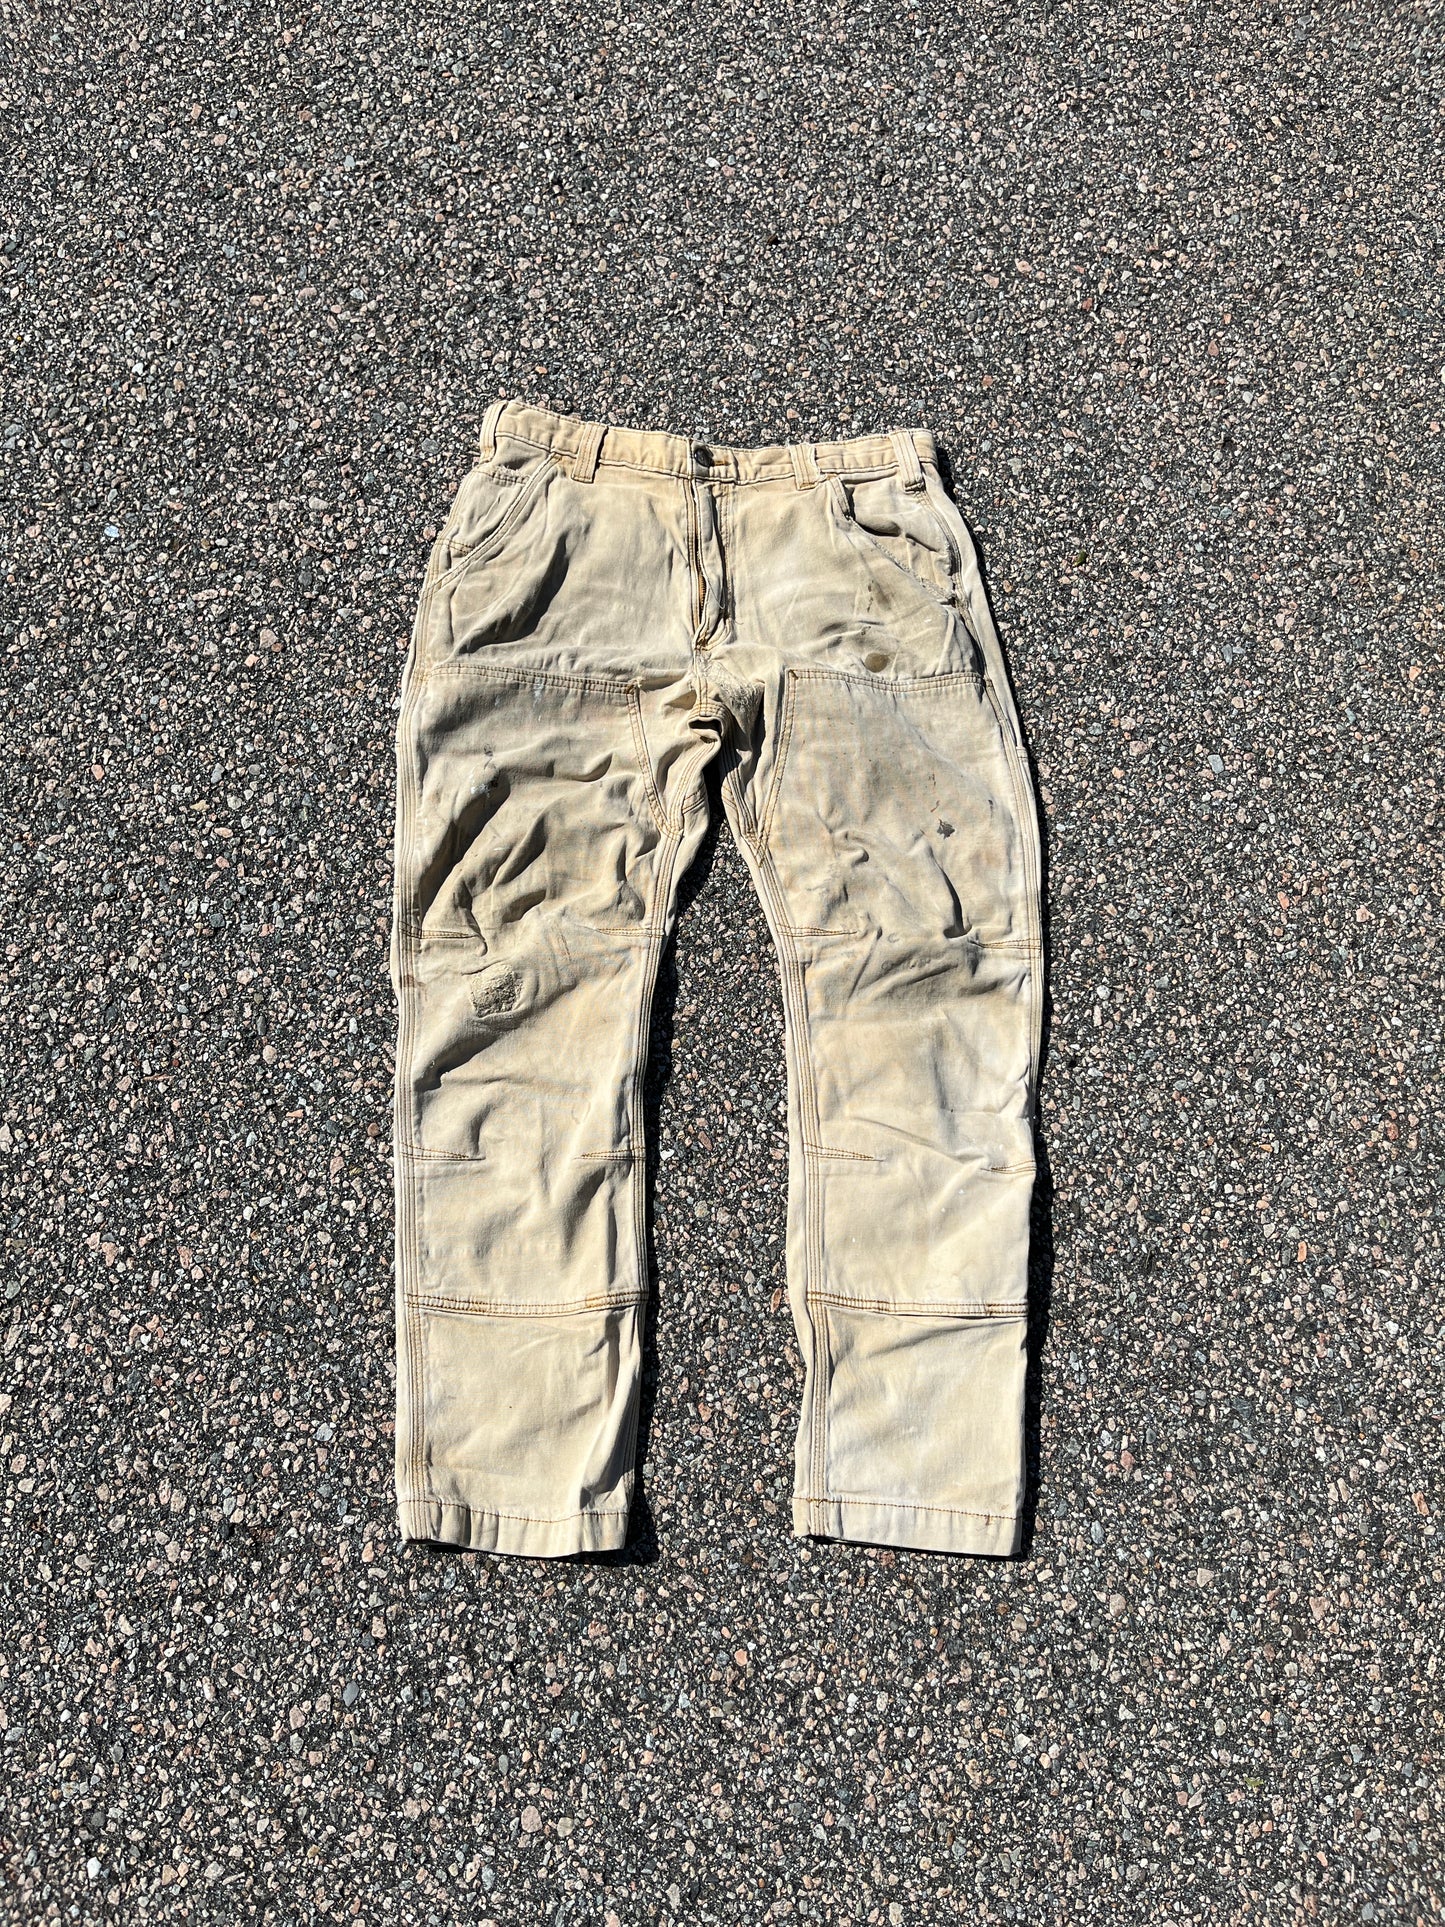 Faded Tan Carhartt Double Knee Pants - 33 x 29